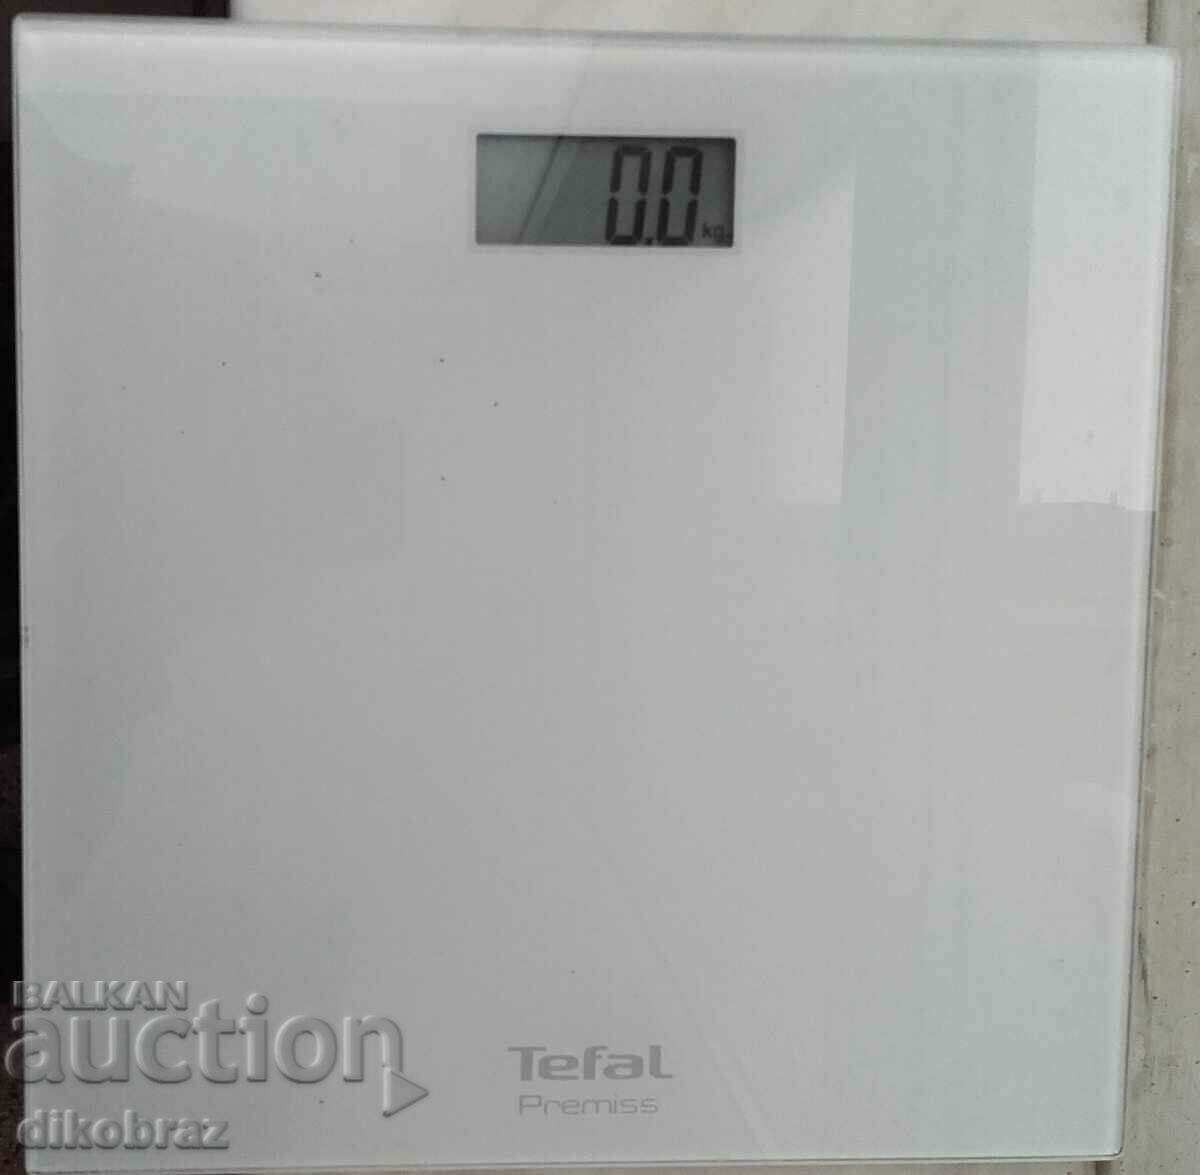 TEFAL - Bathroom scale with electronic display